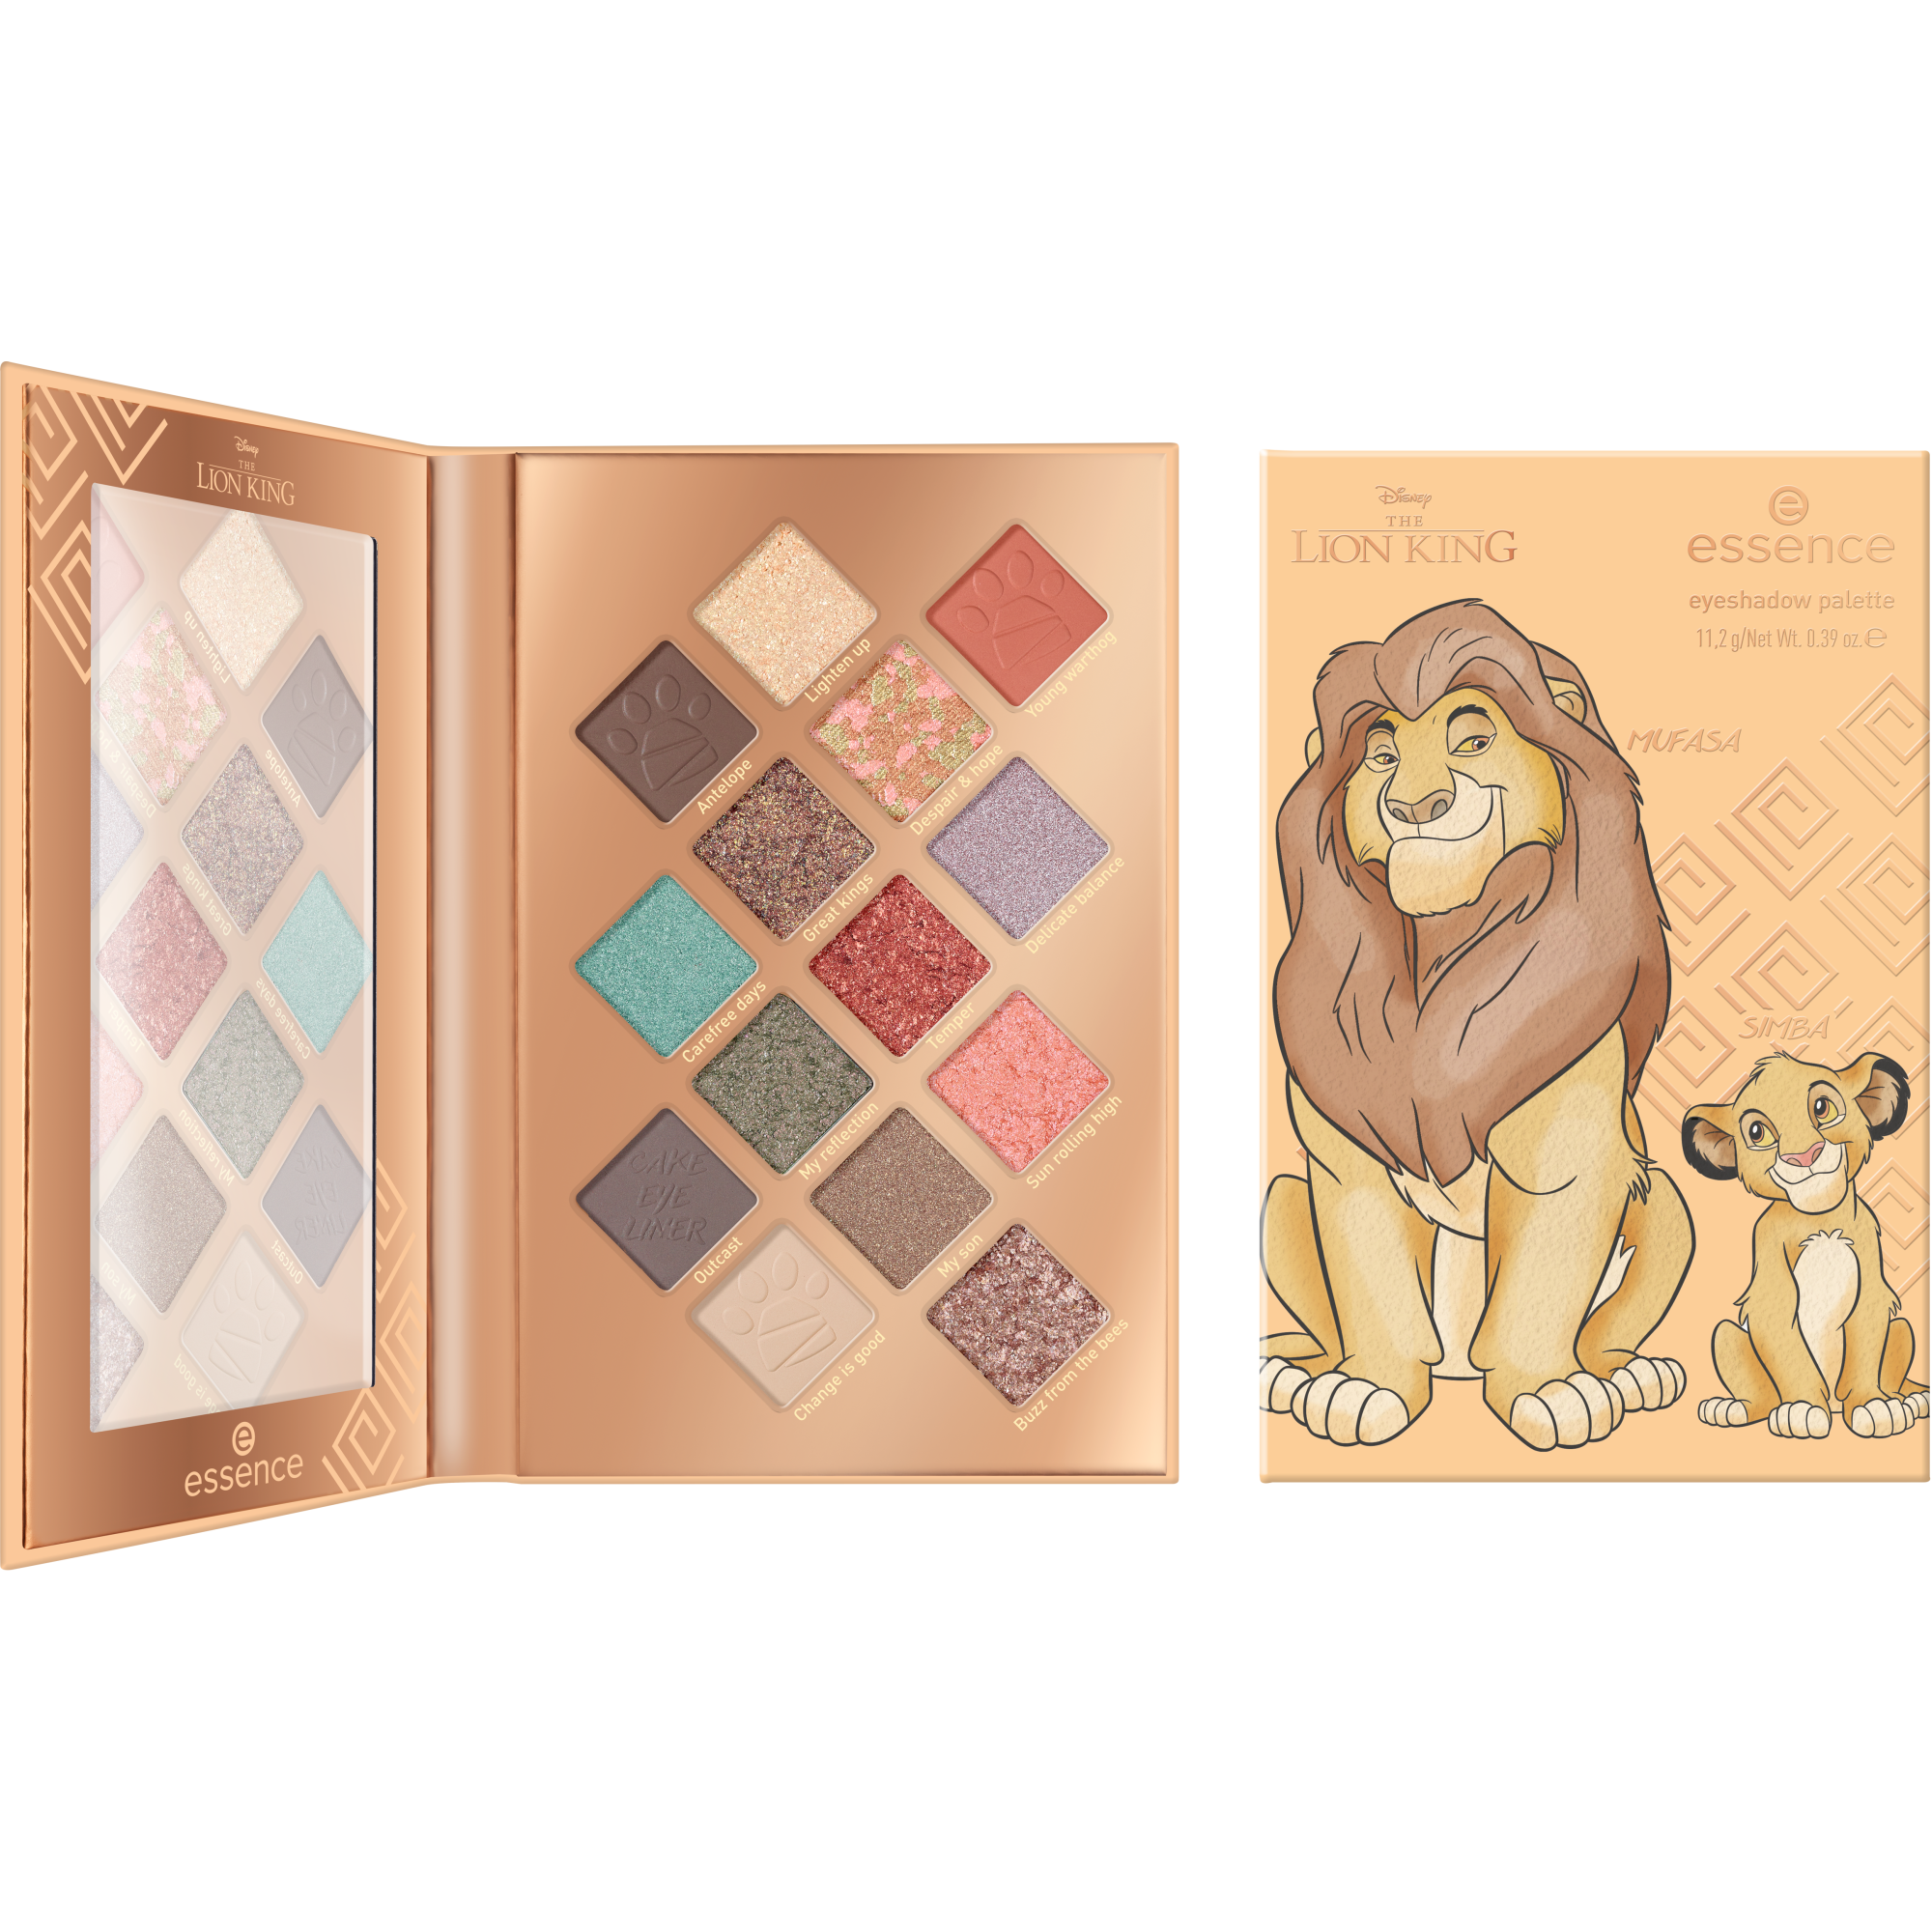 Disney The Lion King eyeshadow palette